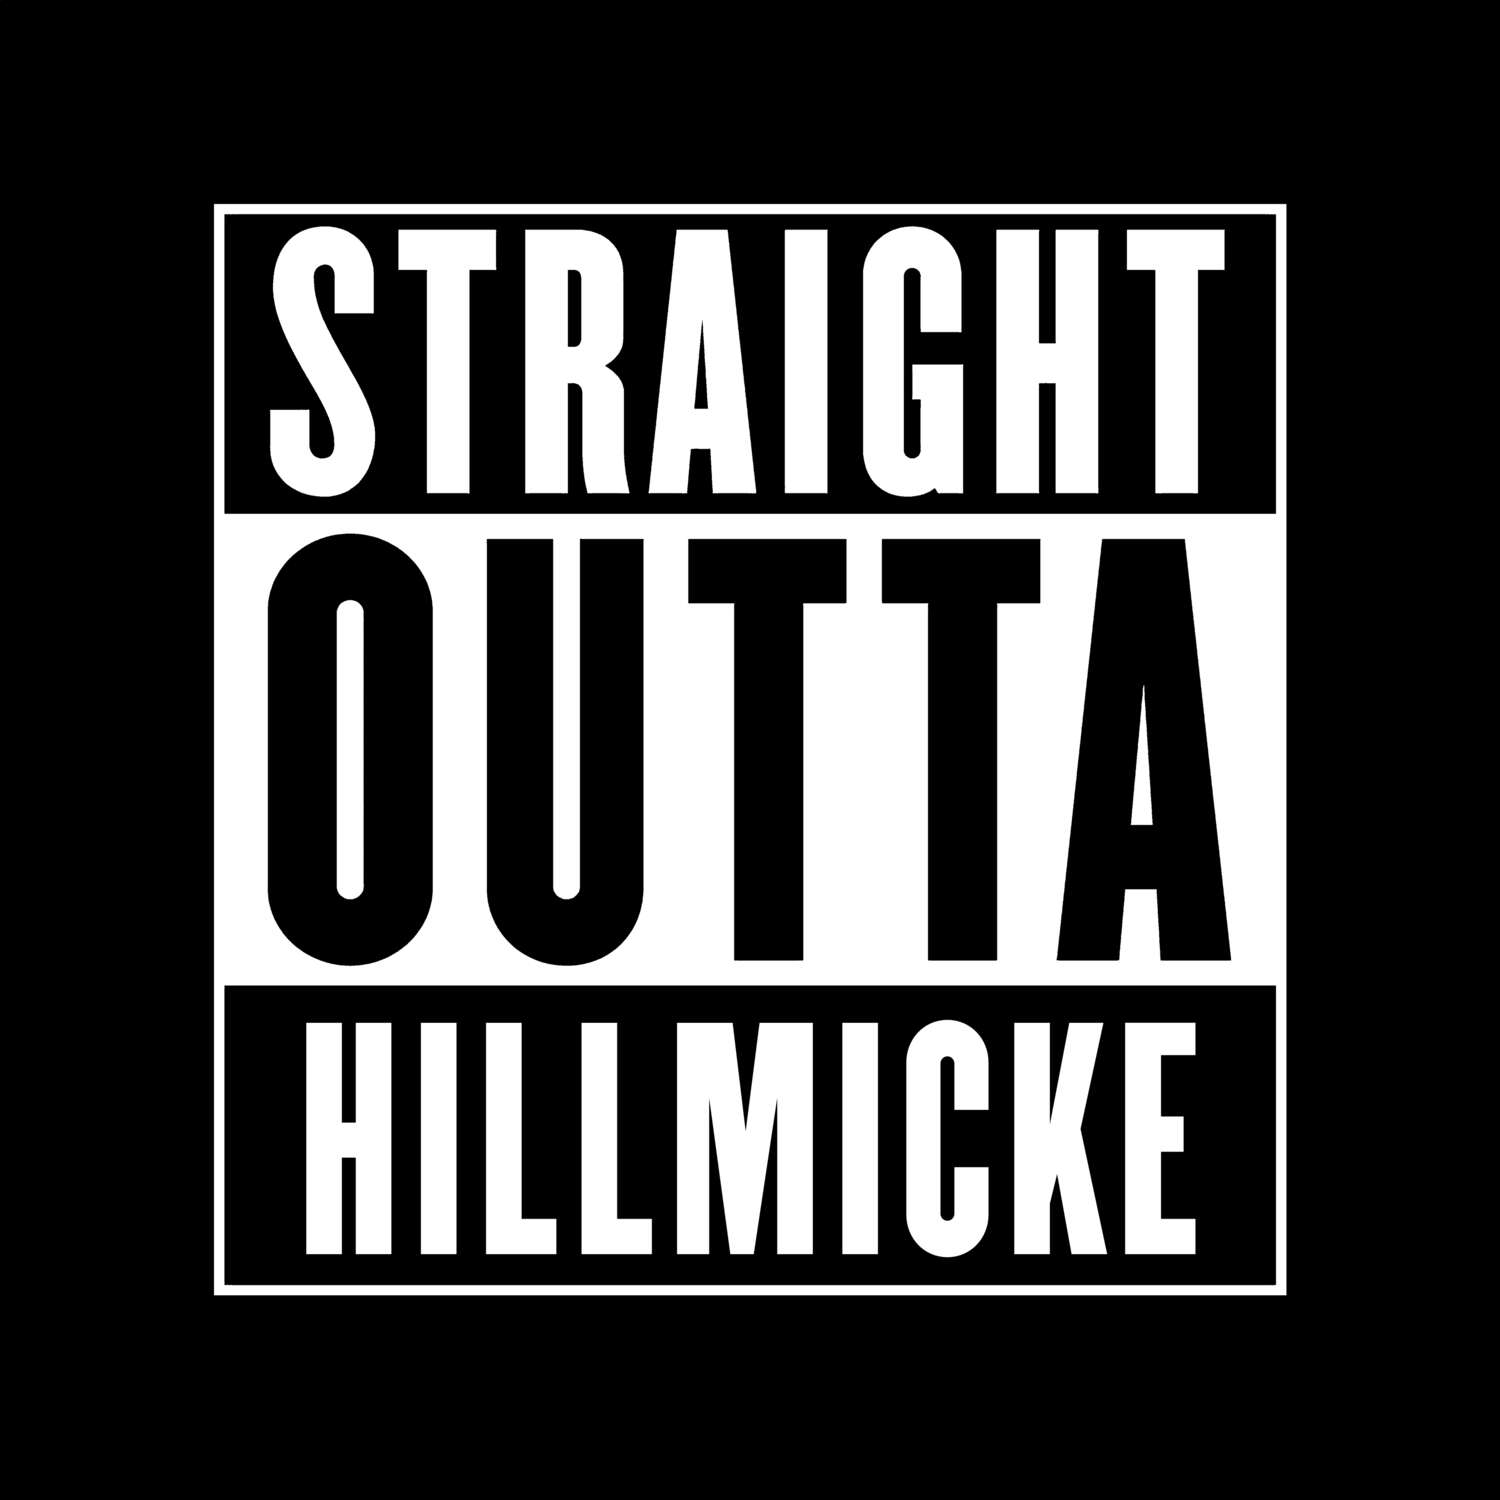 Hillmicke T-Shirt »Straight Outta«